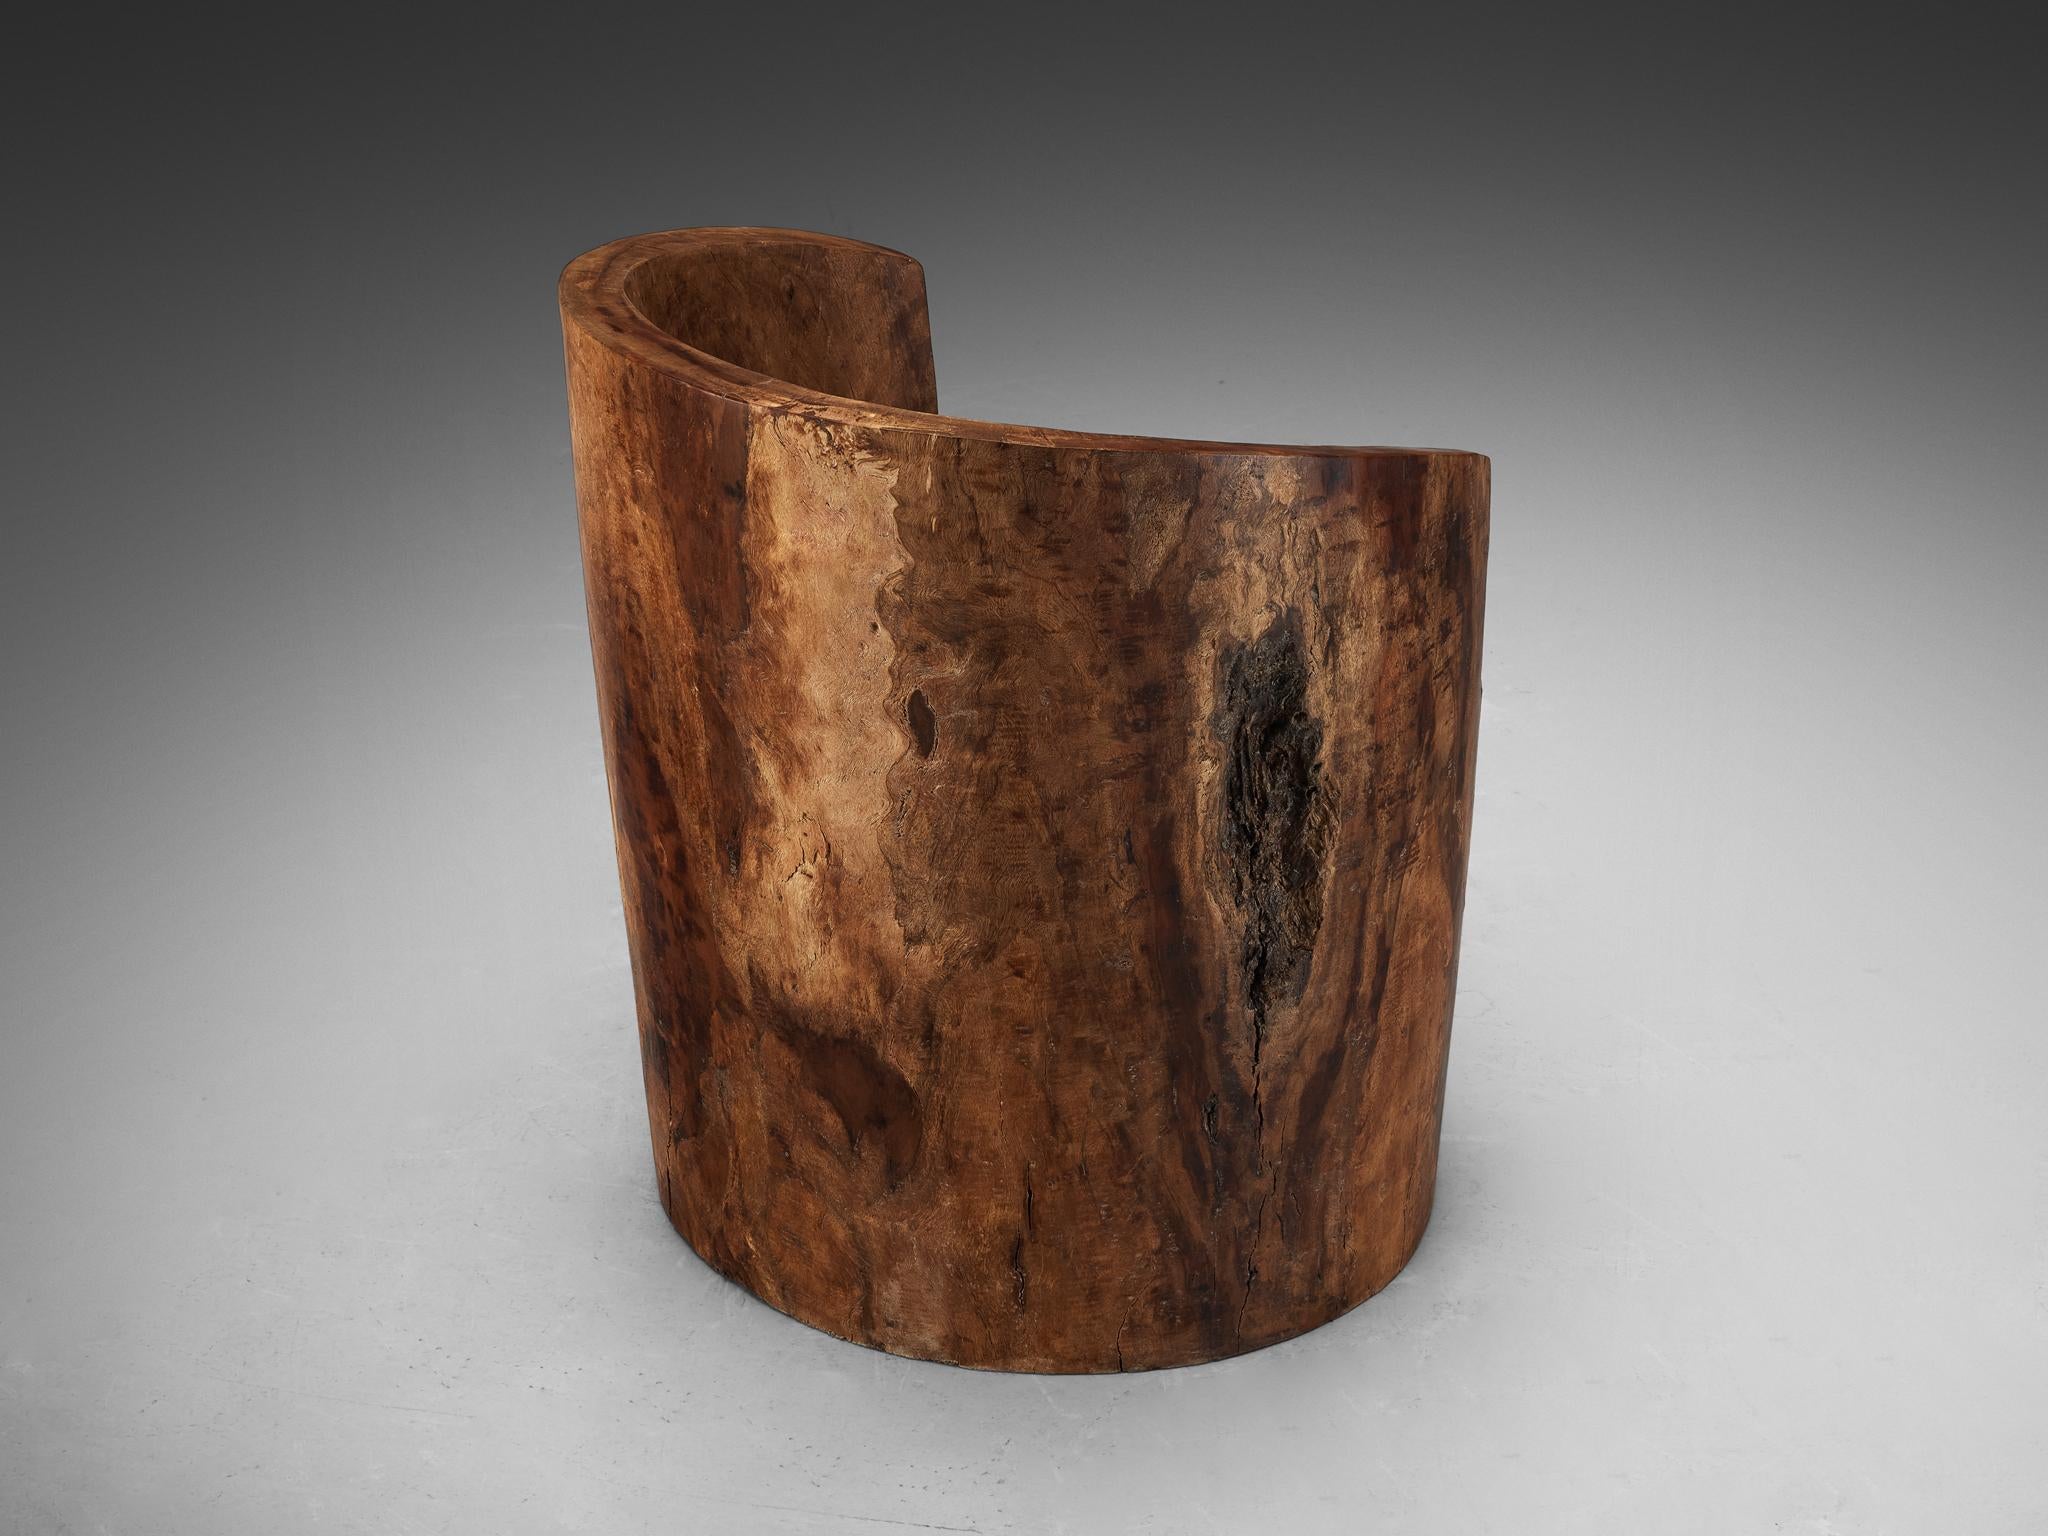 José Zanine Caldas Hand-Carved ‘Pilão’ Chair in Brazilian Hardwood